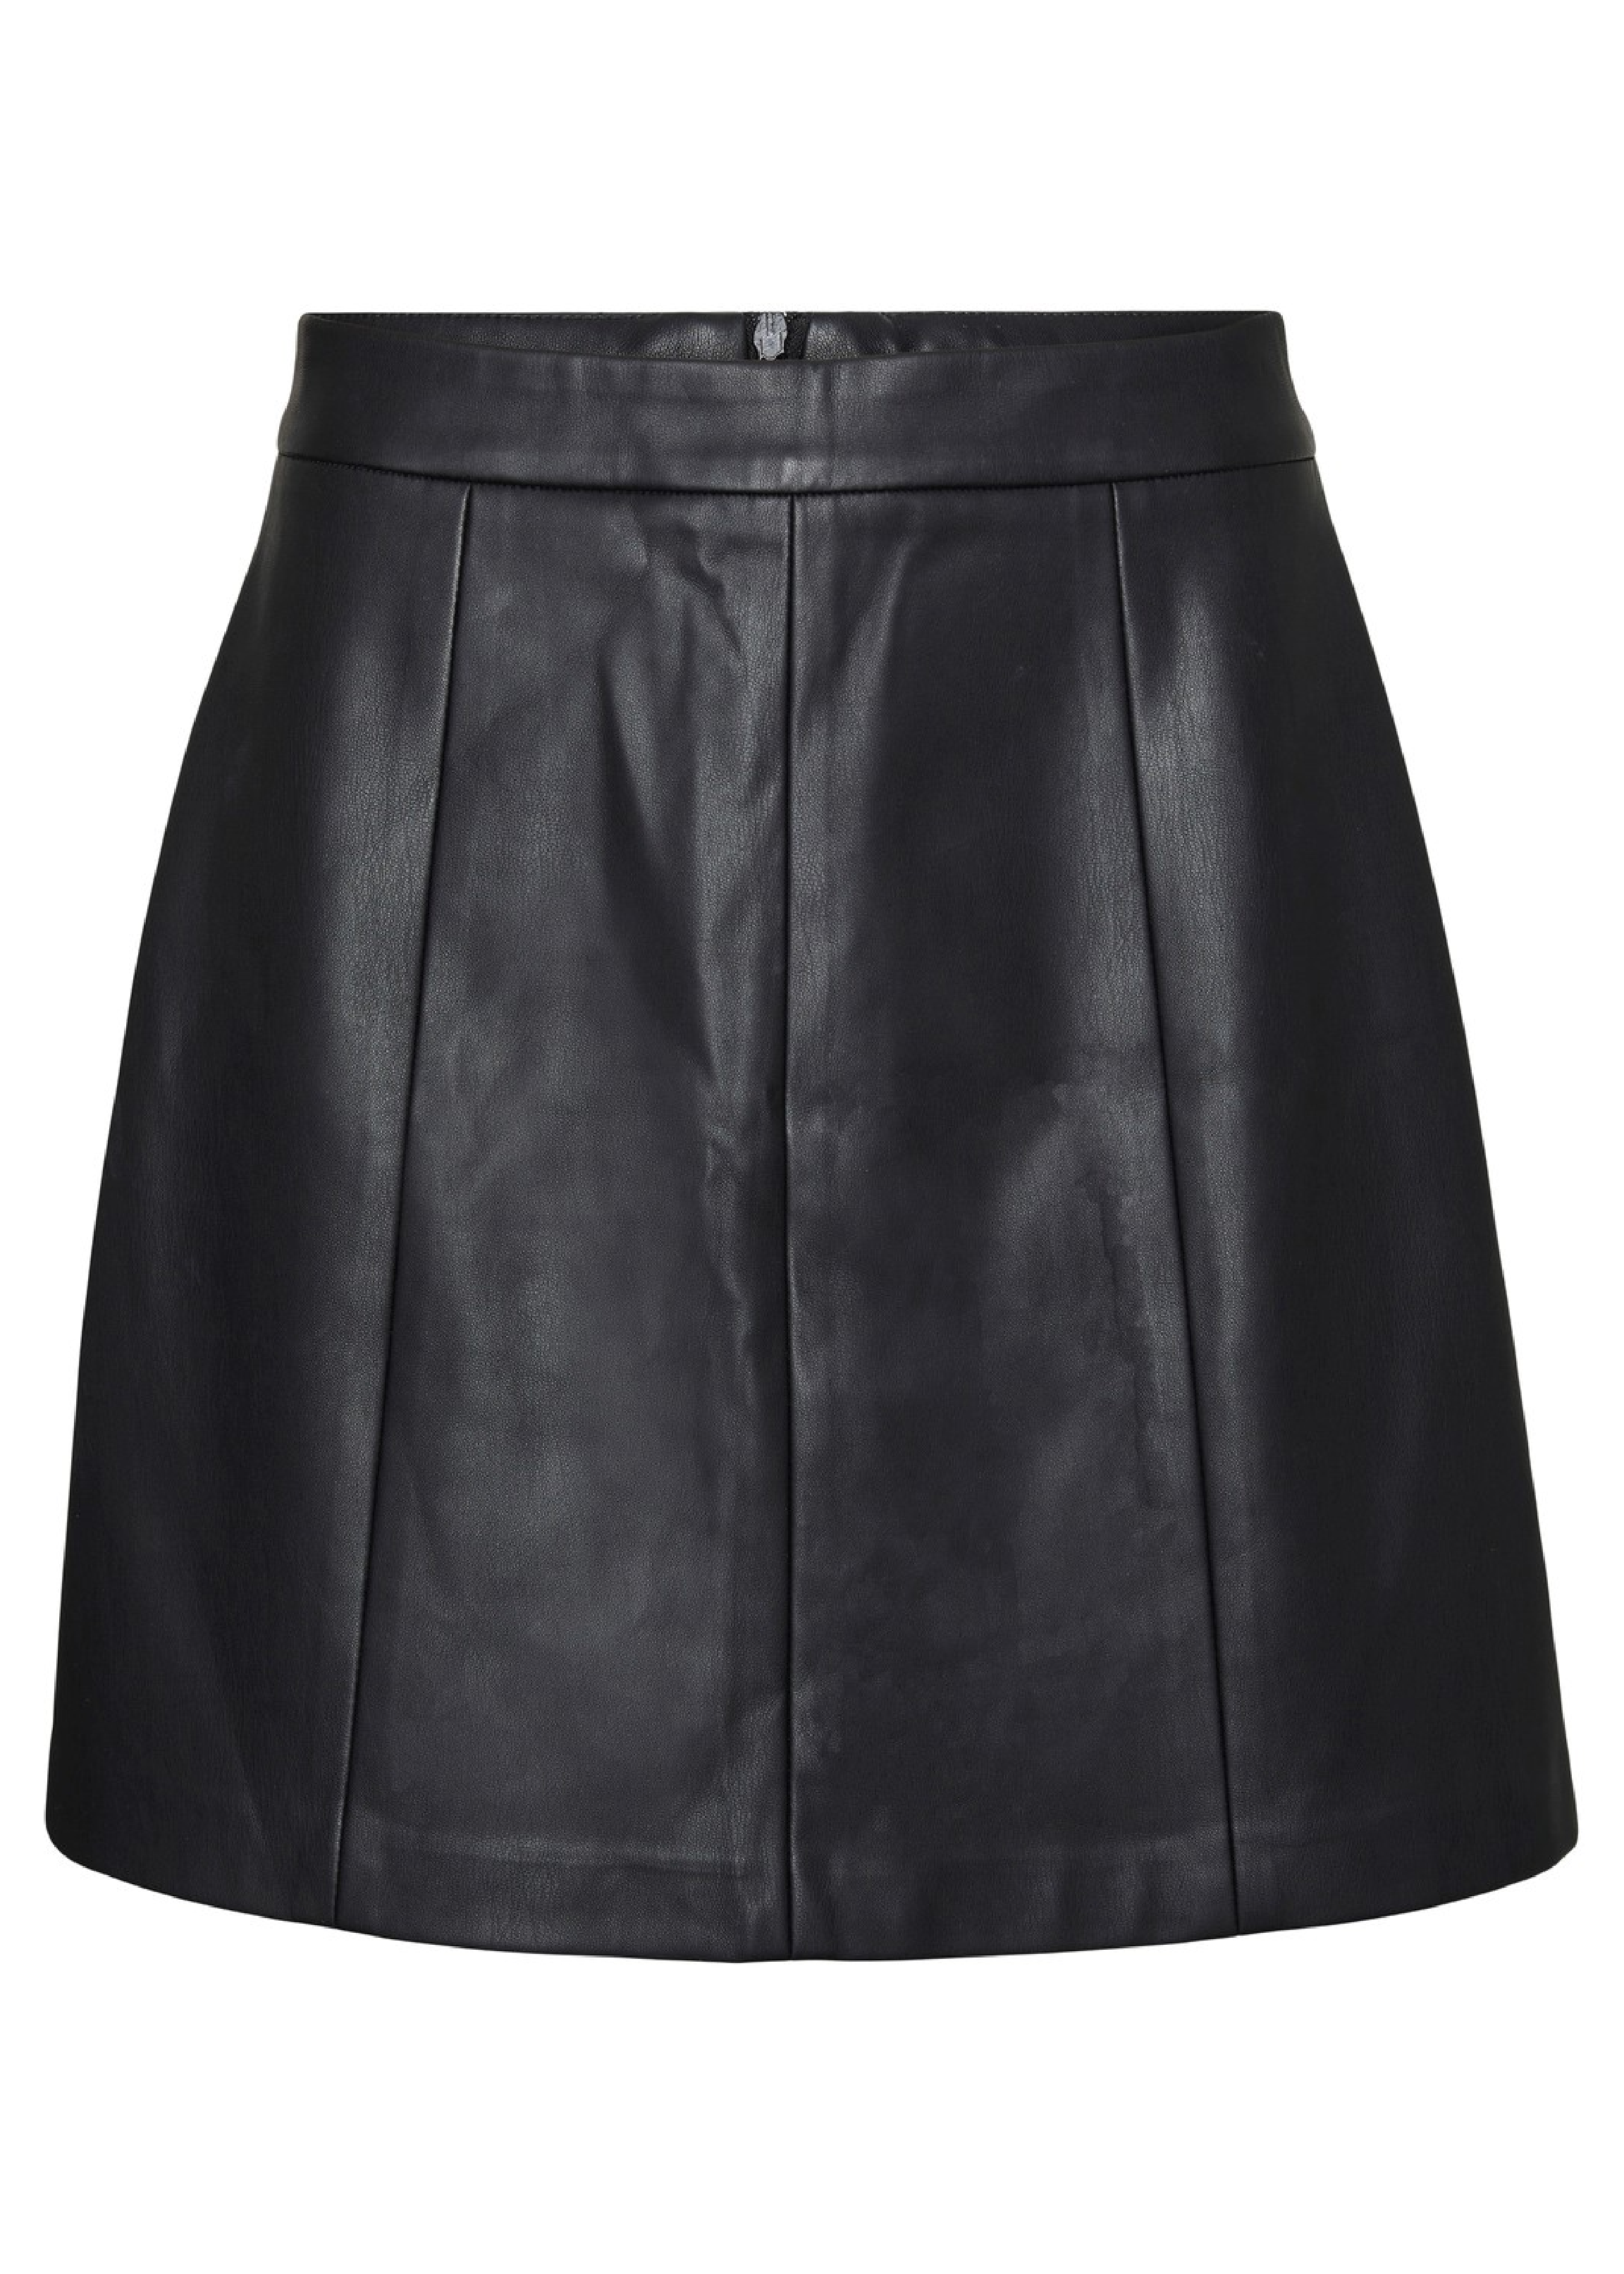 Miamai Black Faux Leather Mini Skirt